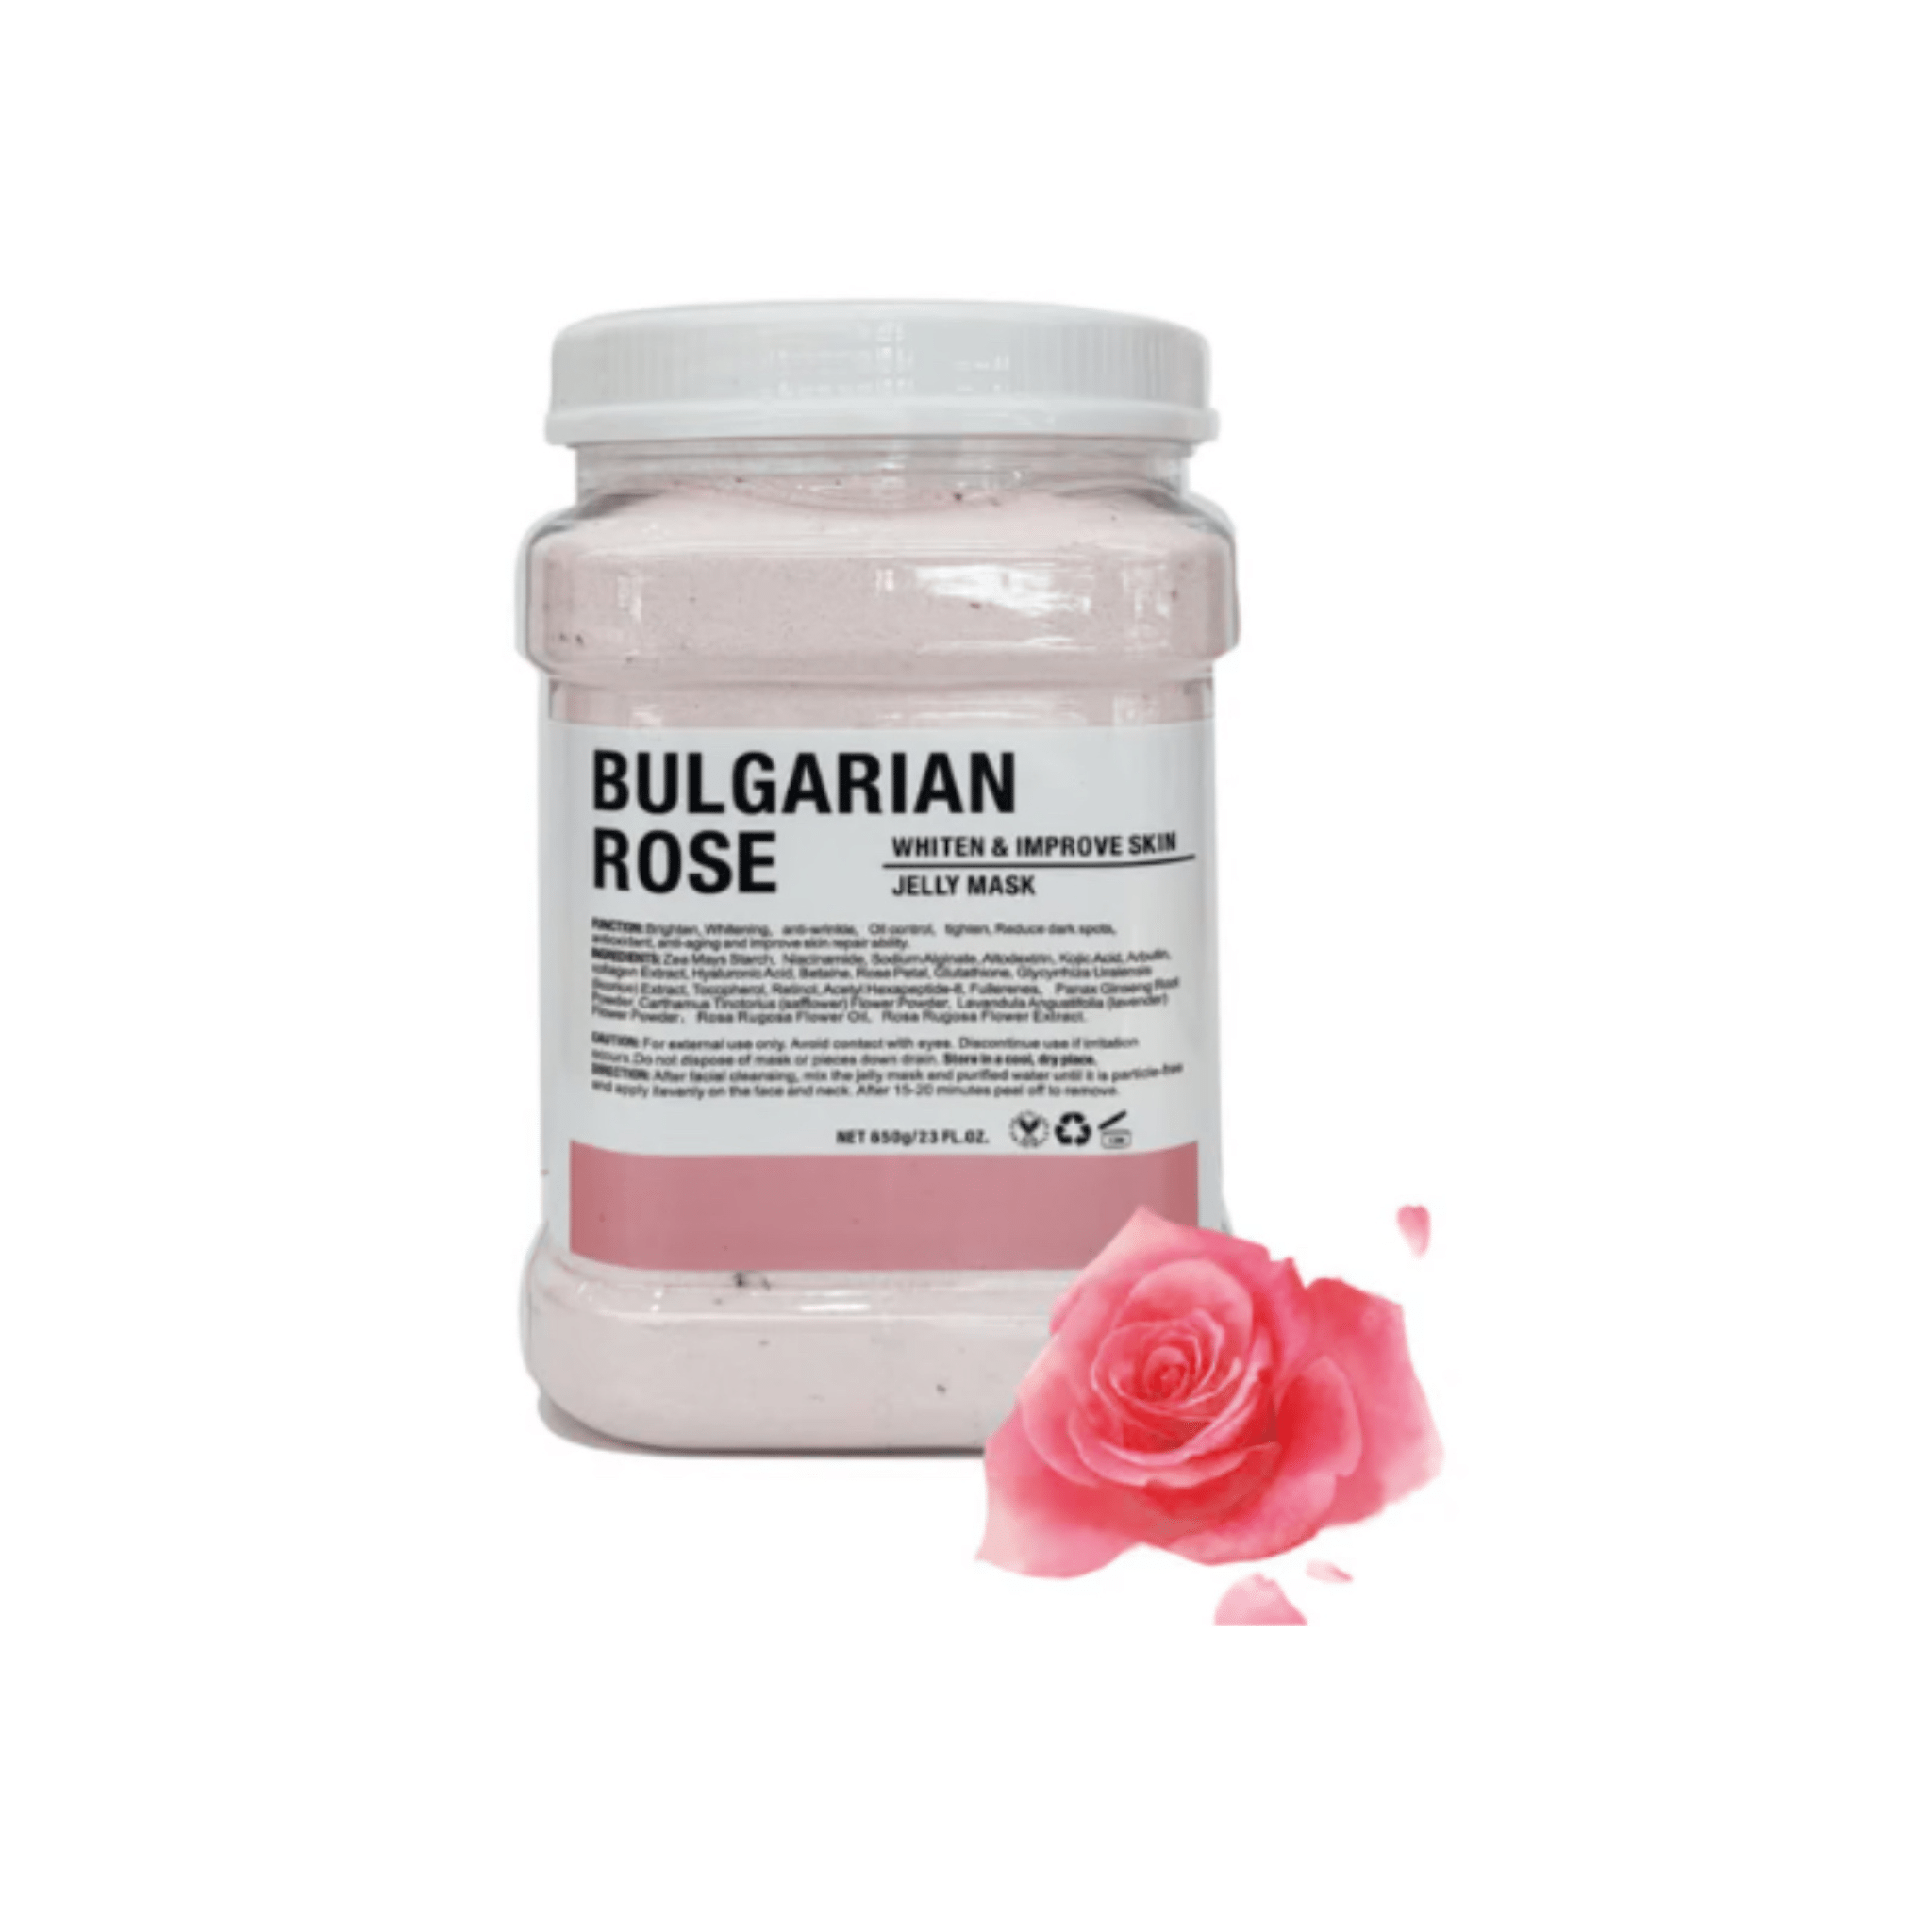 Bulgarian rose whiten & improve skin jelly mask 650g - Alcone